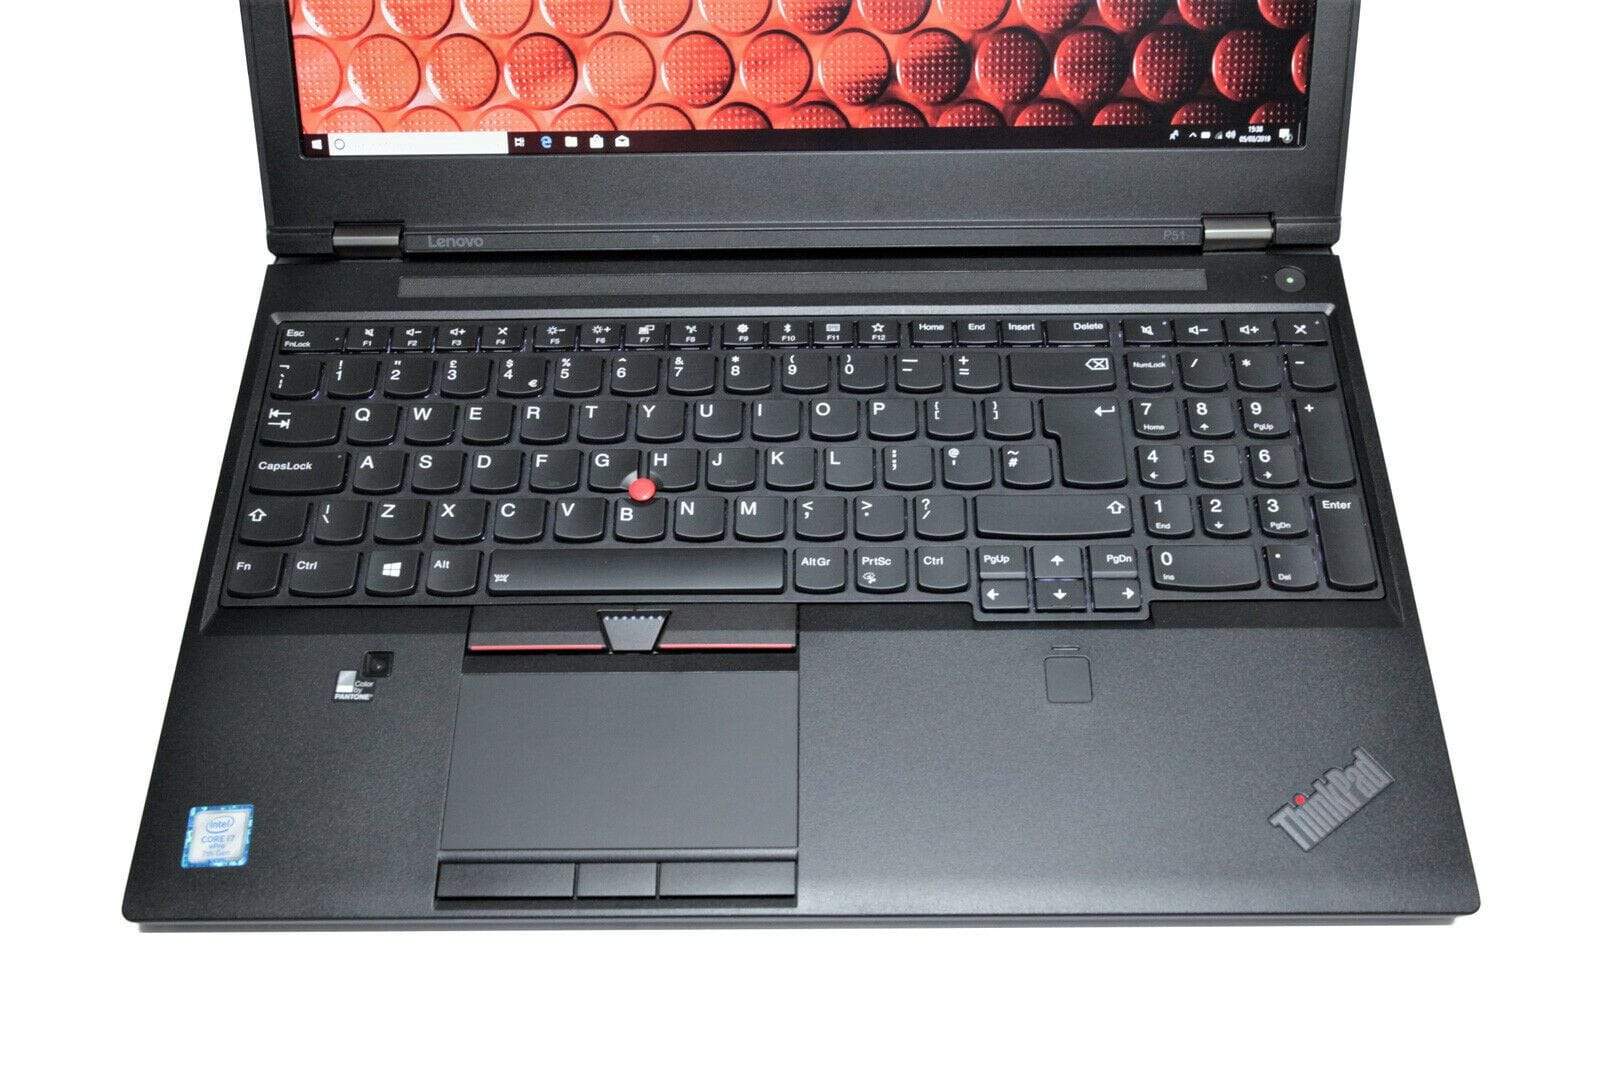 Lenovo ThinkPad P51 Workstation: Core i7-7820HQ, 16GB RAM, 256GB SSD, Warranty - CruiseTech